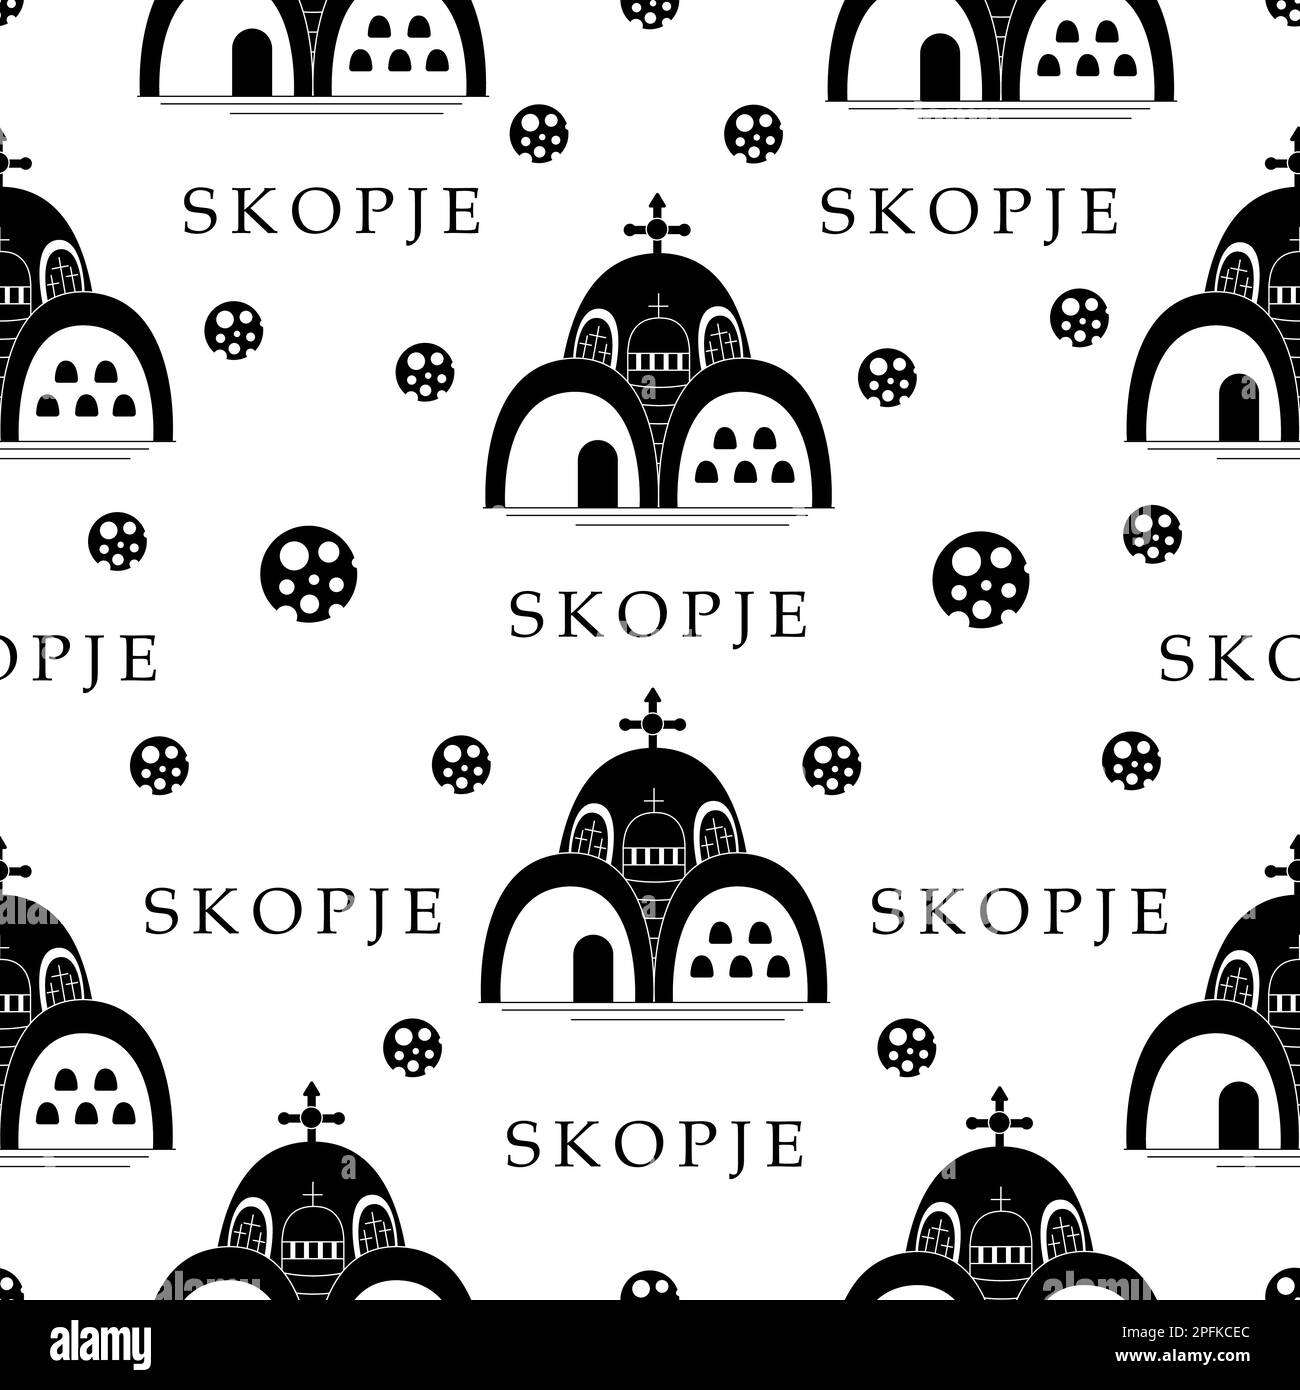 Skopje, black and white seamless pattern Stock Vector